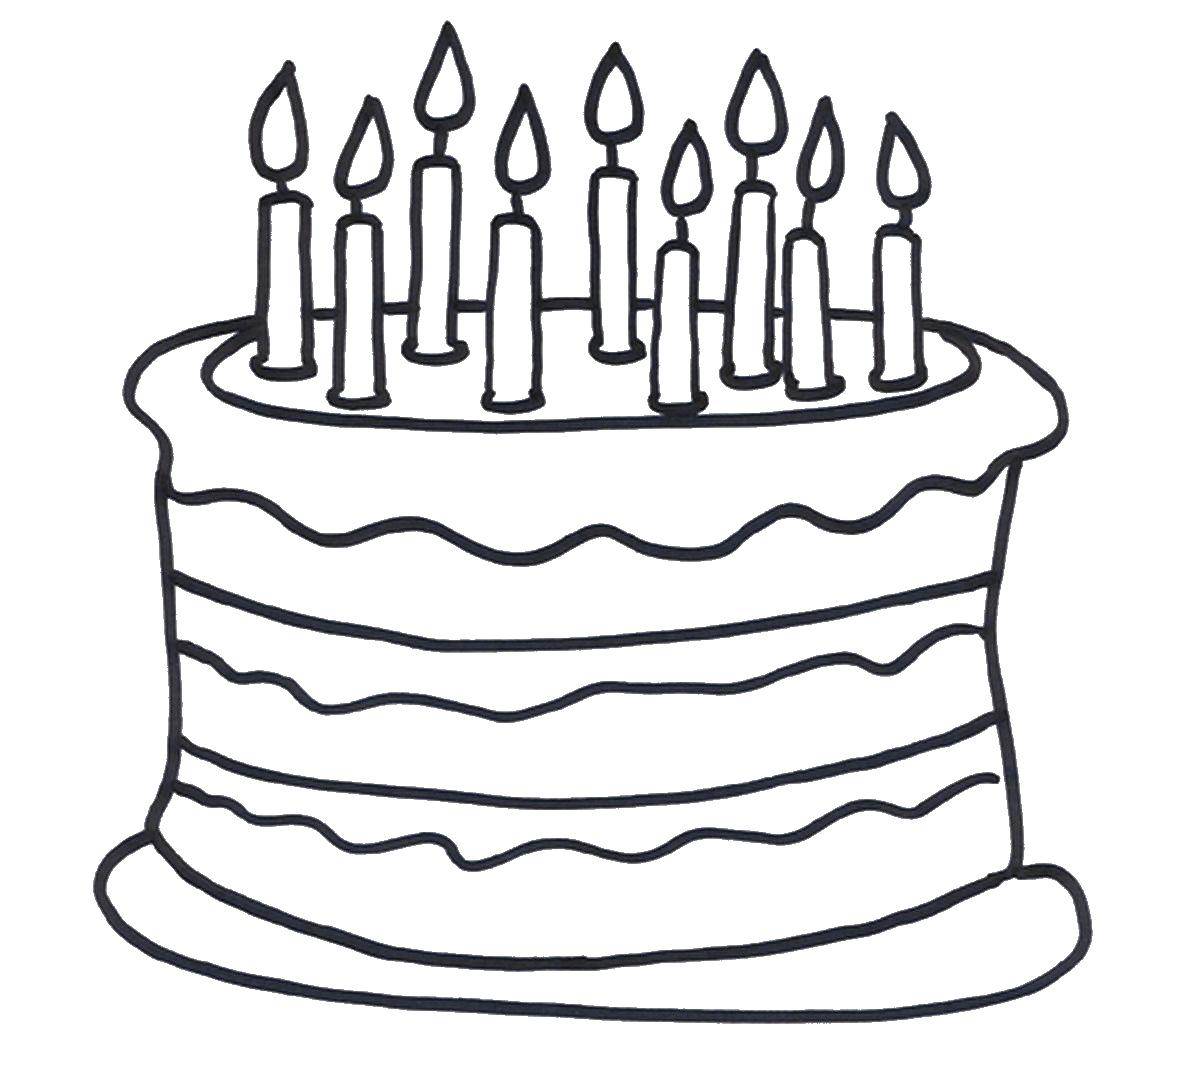 Название: Раскраска Торт со свечками. Категория: торты. Теги: торт.